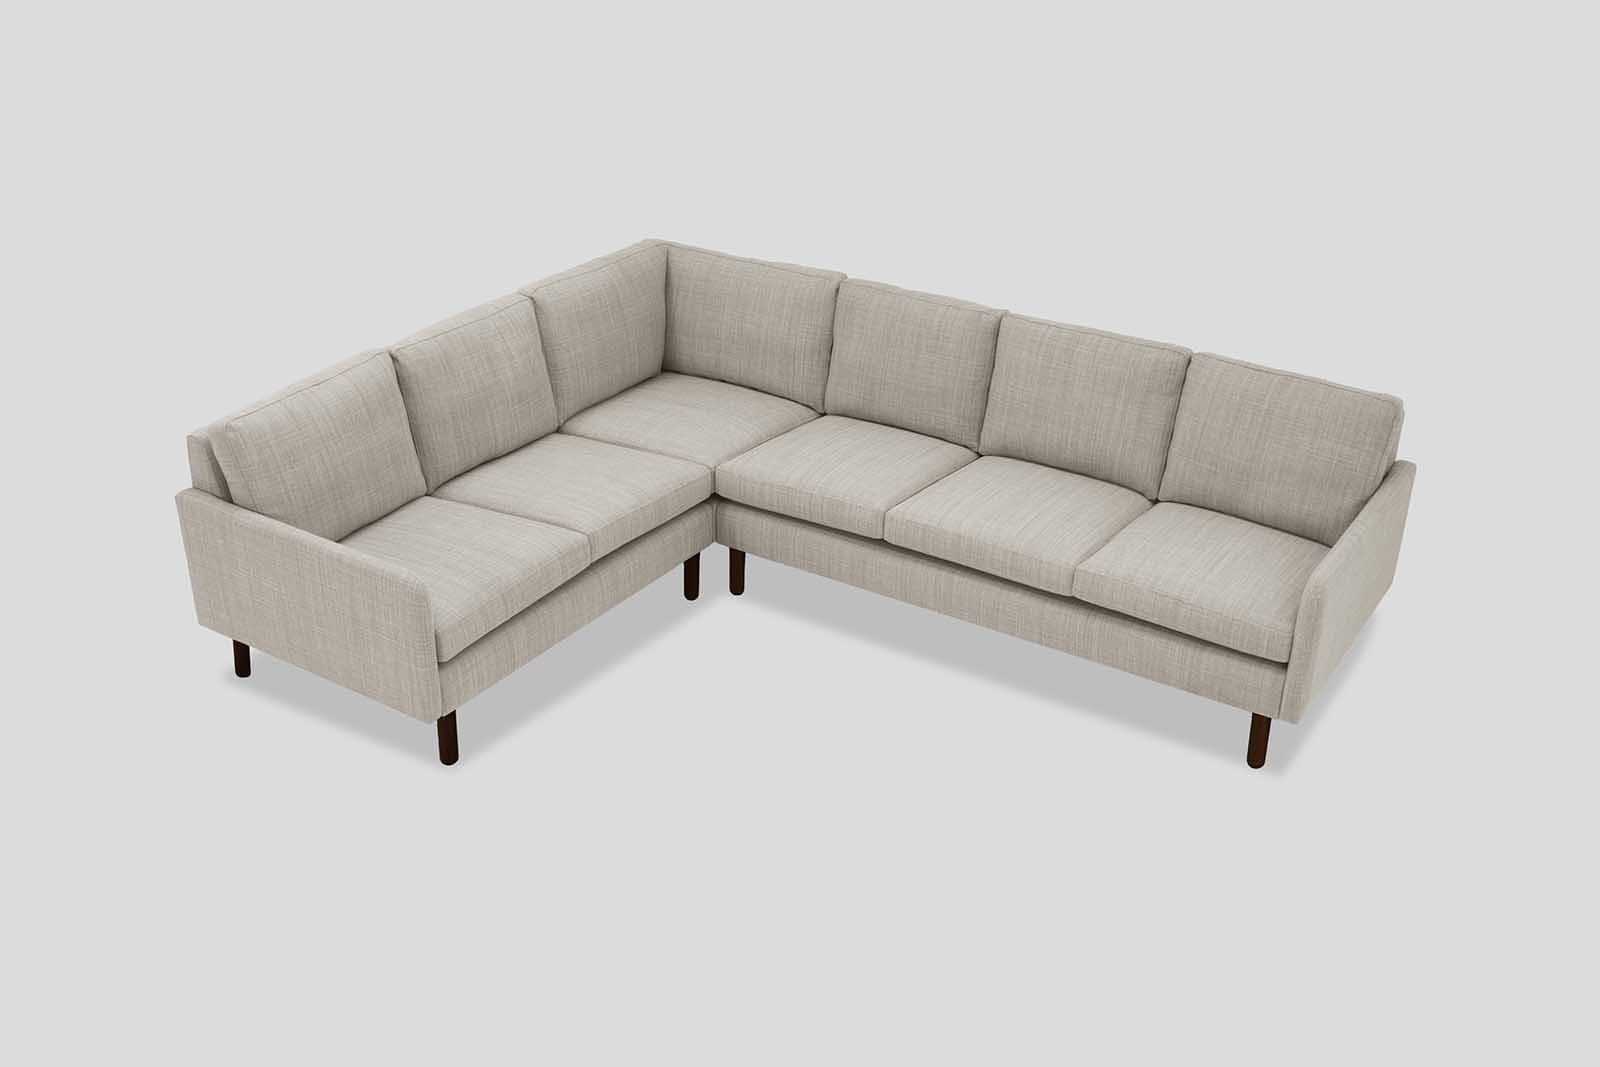 HB03-medium-corner-sofa-coconut-2x3-overhead-treacle